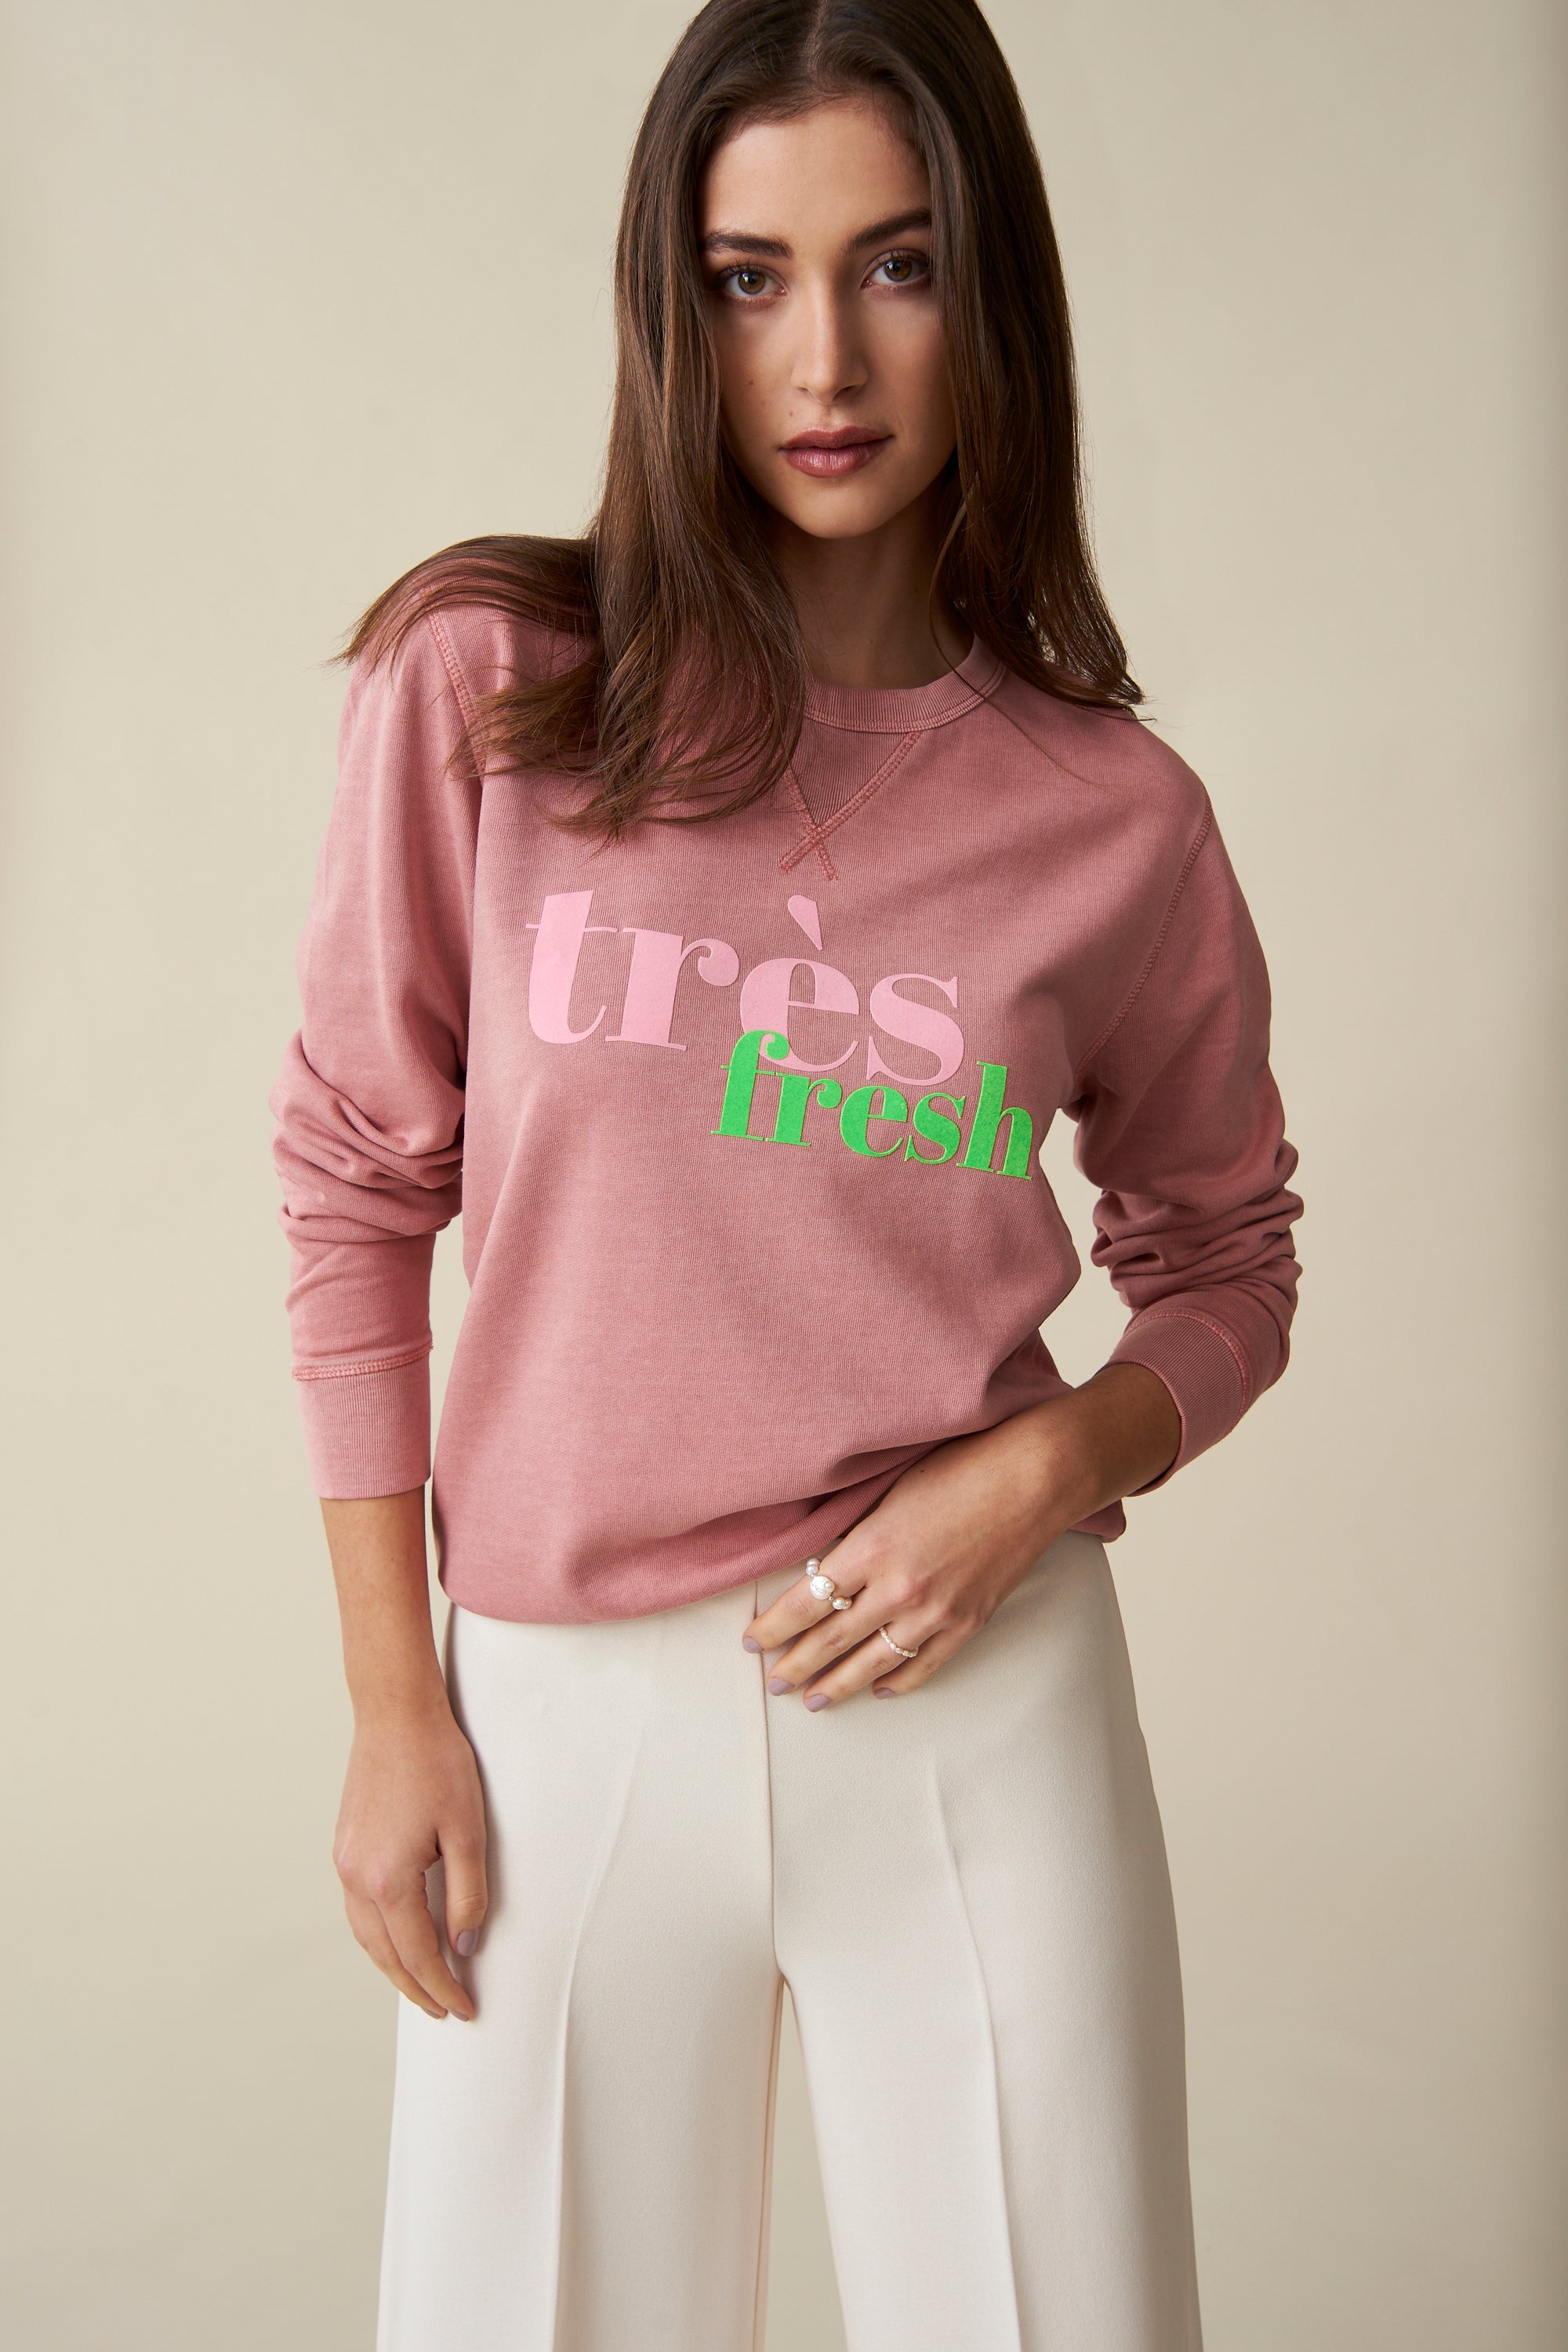 Très Fresh Sweater - Vintage Rose/Green 